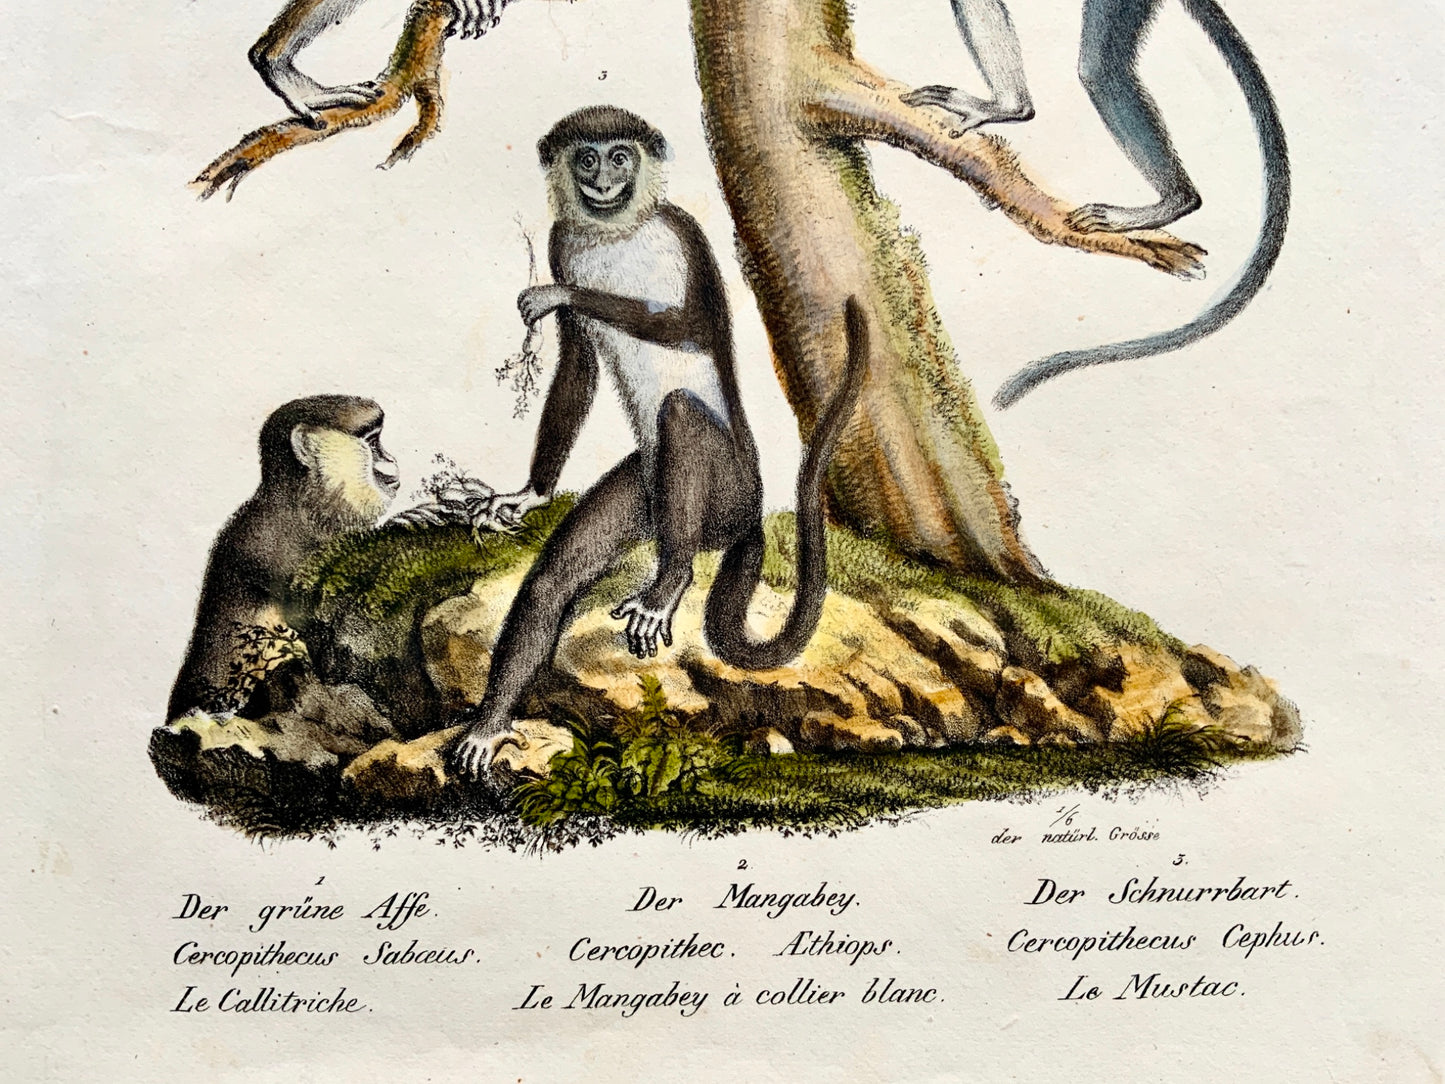 1824 Guenon Old World Monkey K.J. Brodtmann col FOLIO stone lithograph - Mammals